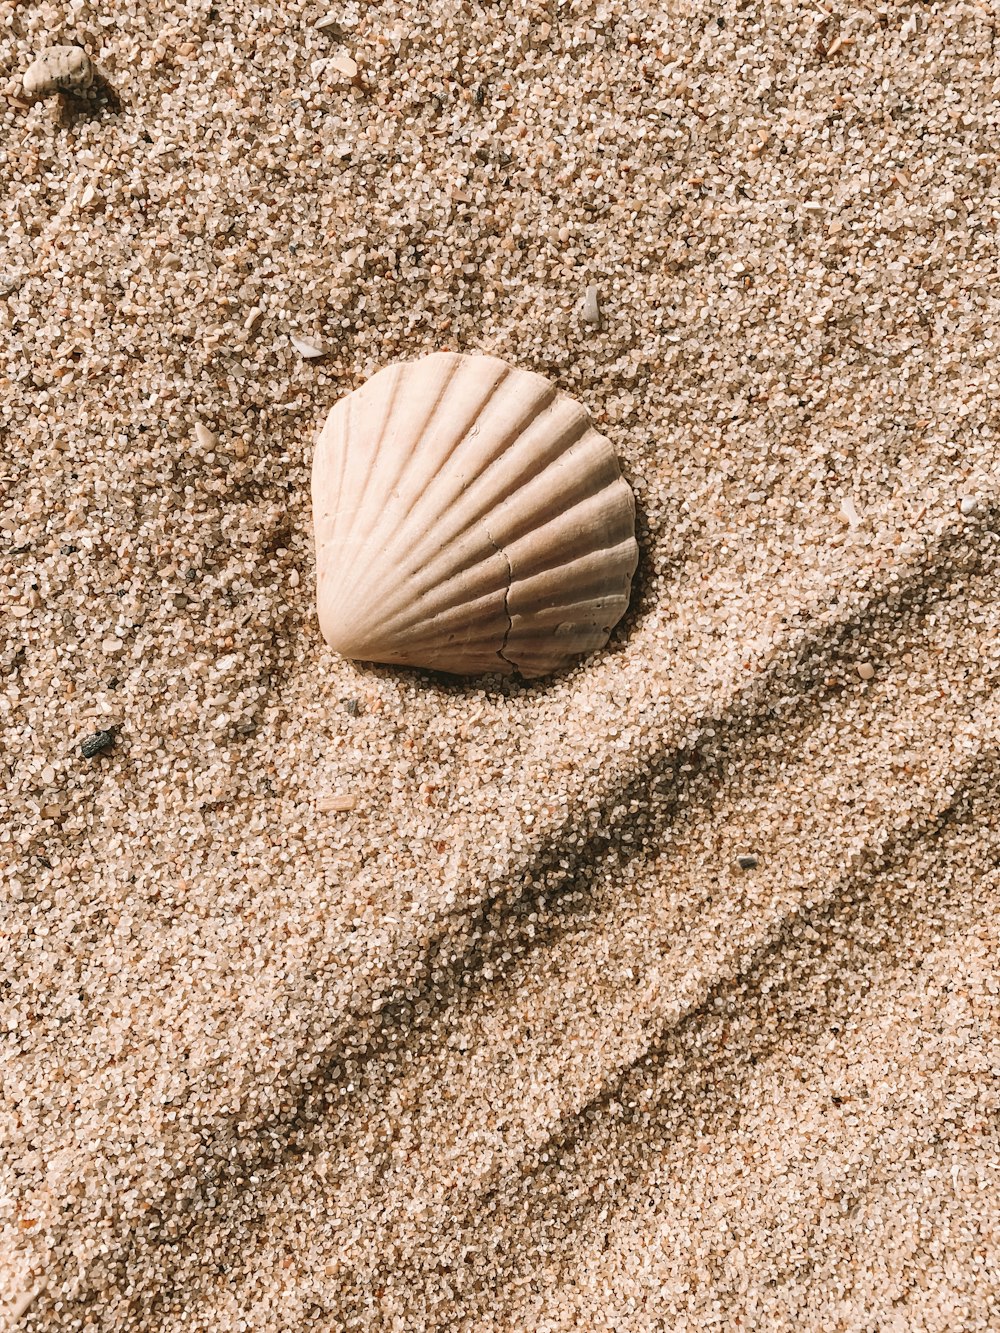 white seashell on sand